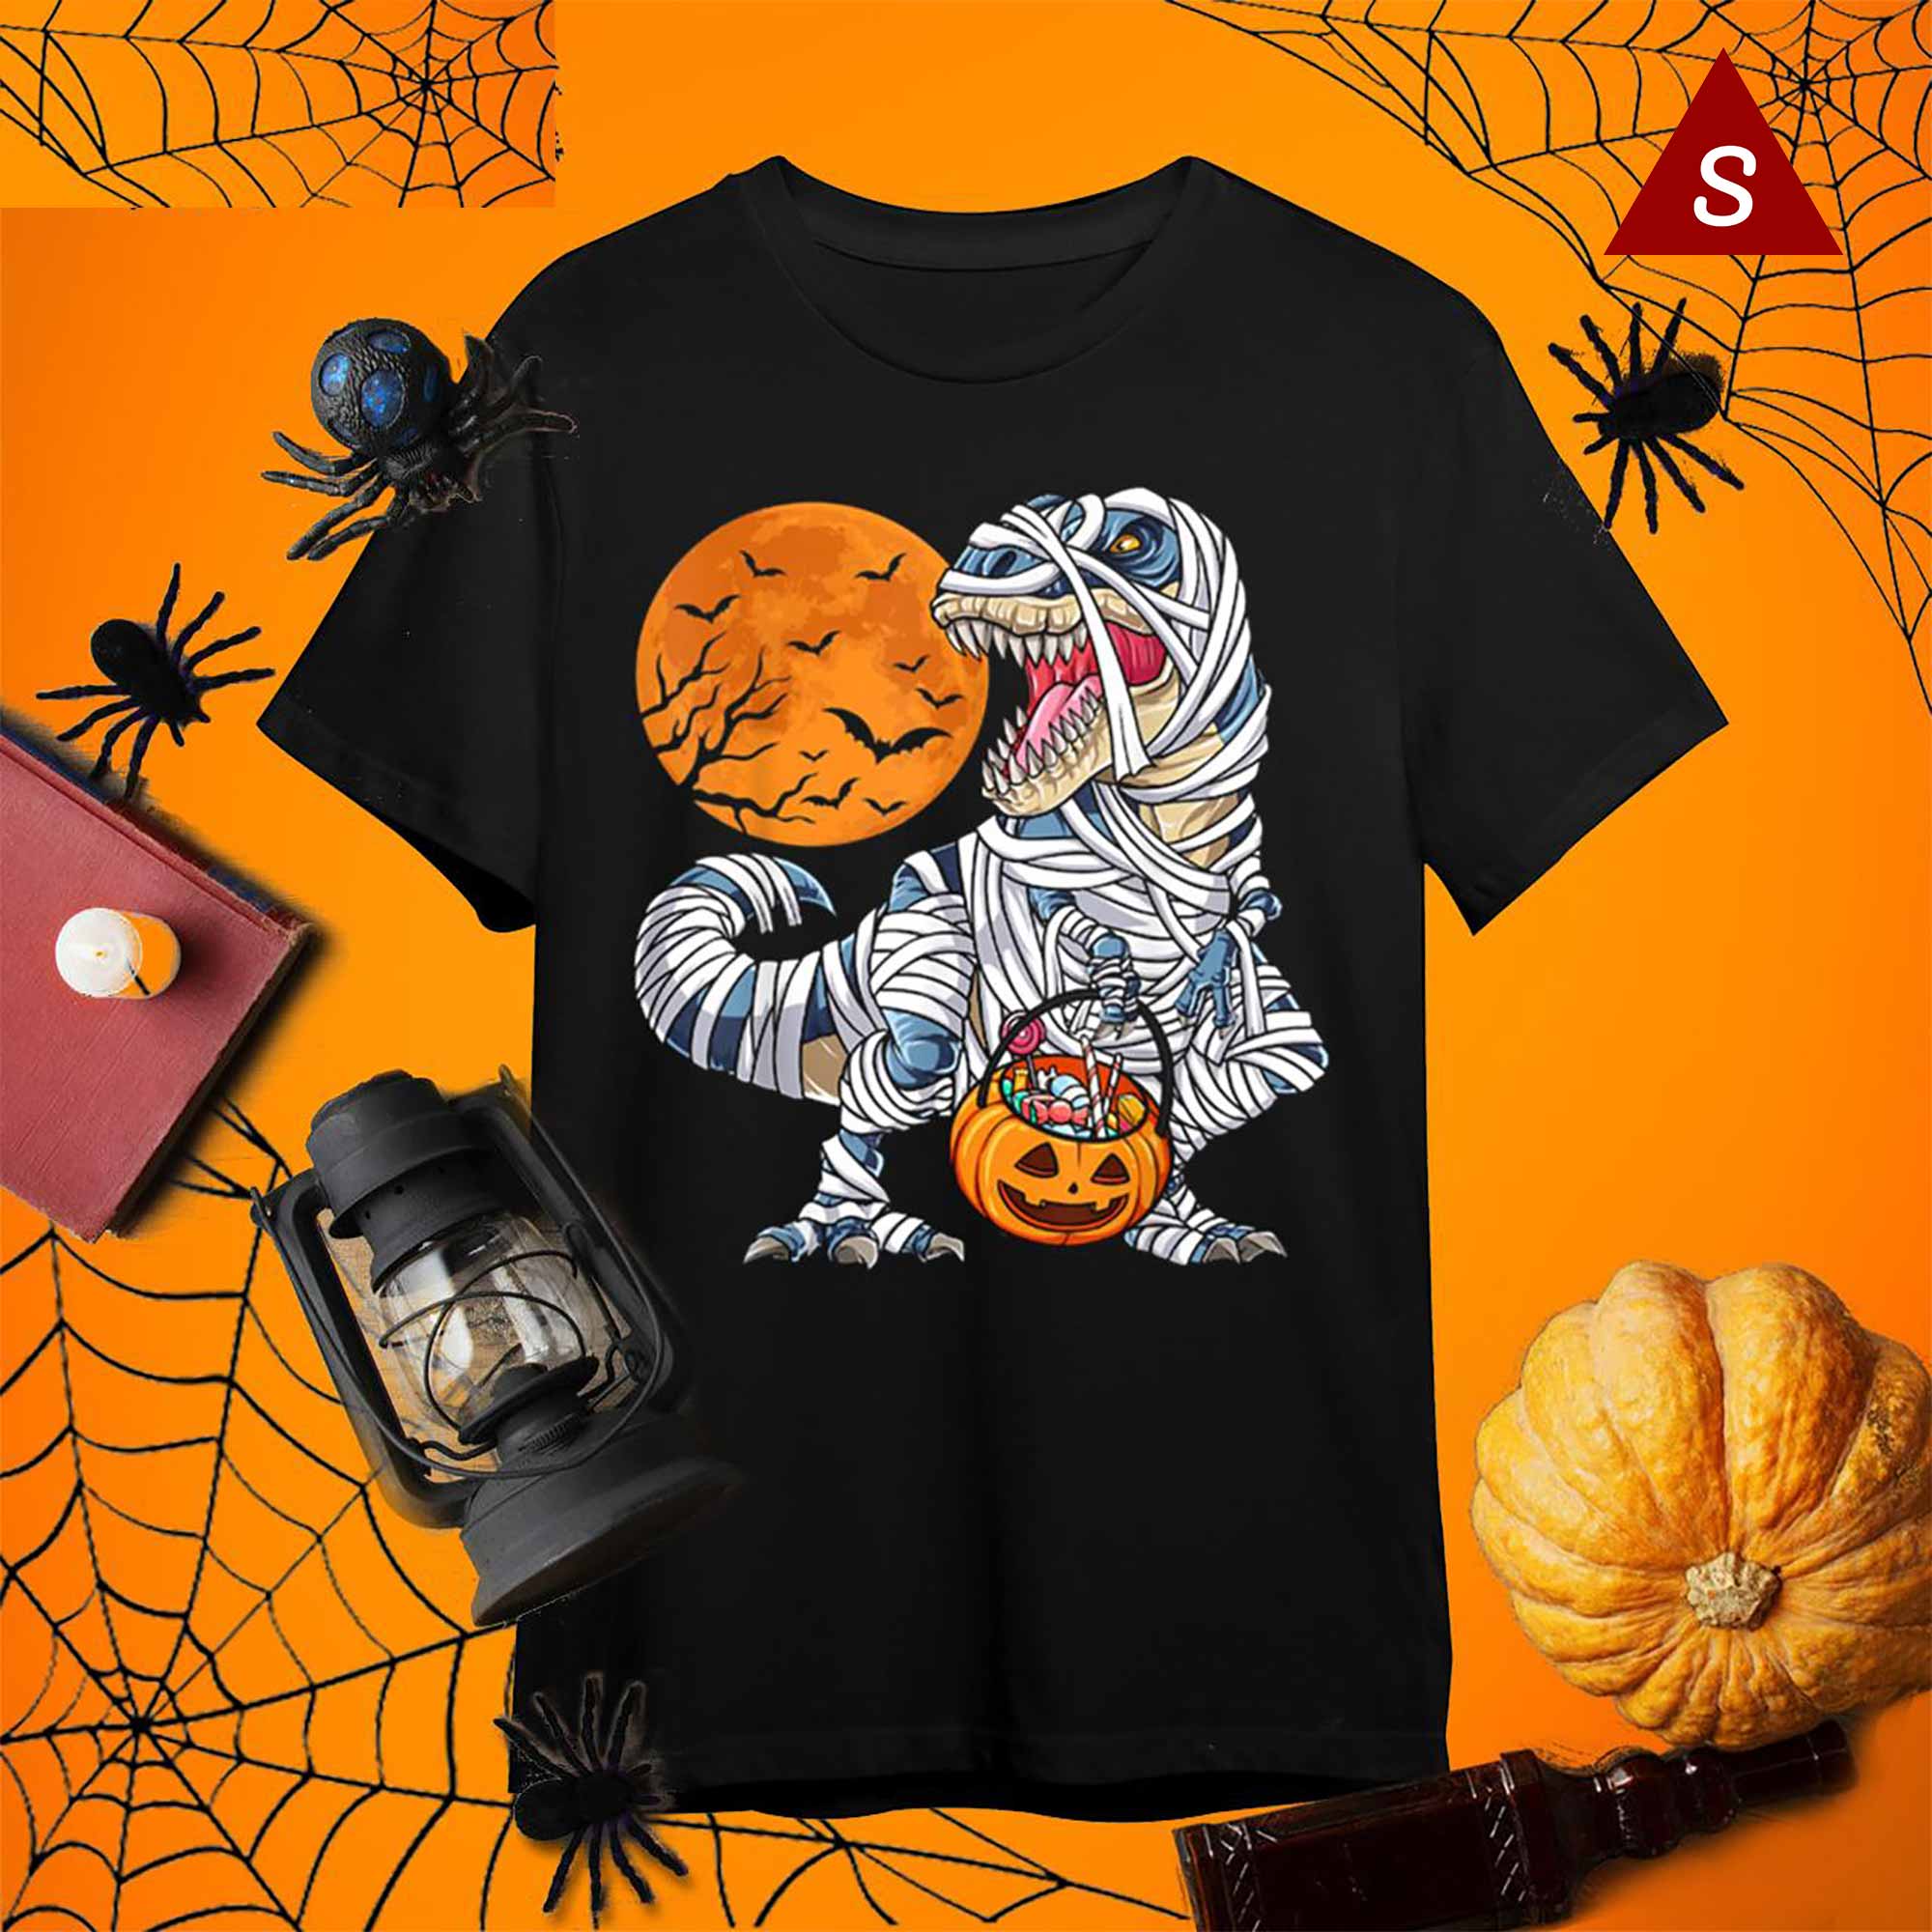 Skitongift Halloween Horror Nights Shirts Dinosaur T Rex Mummy Pumpkin